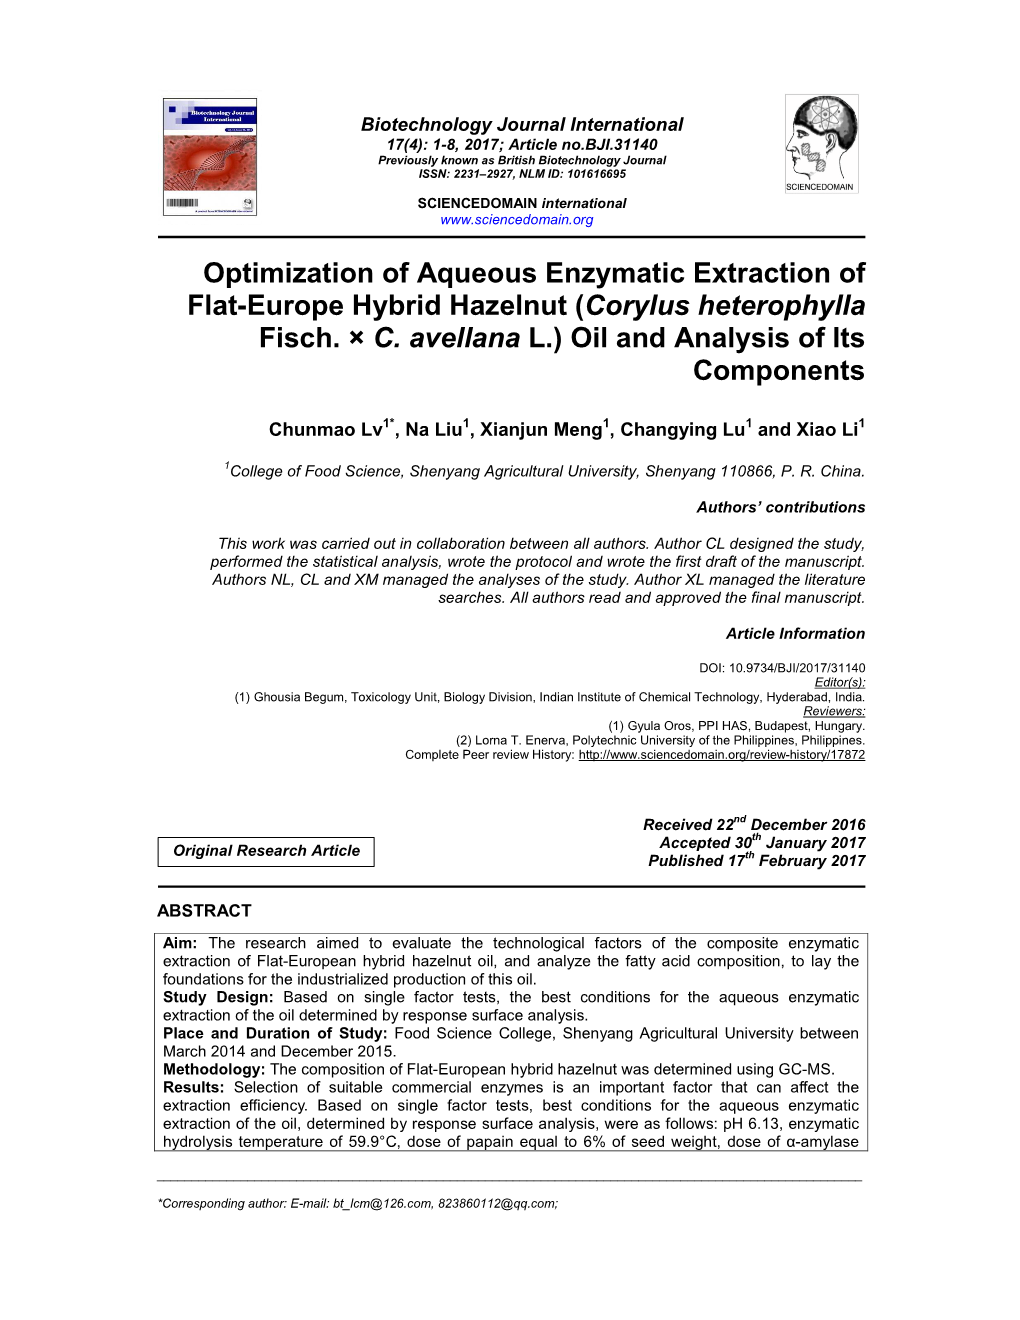 Optimization of Aqueous Enzymatic Extraction of Flat-Europe Hybrid Hazelnut (Corylus Heterophylla Fisch